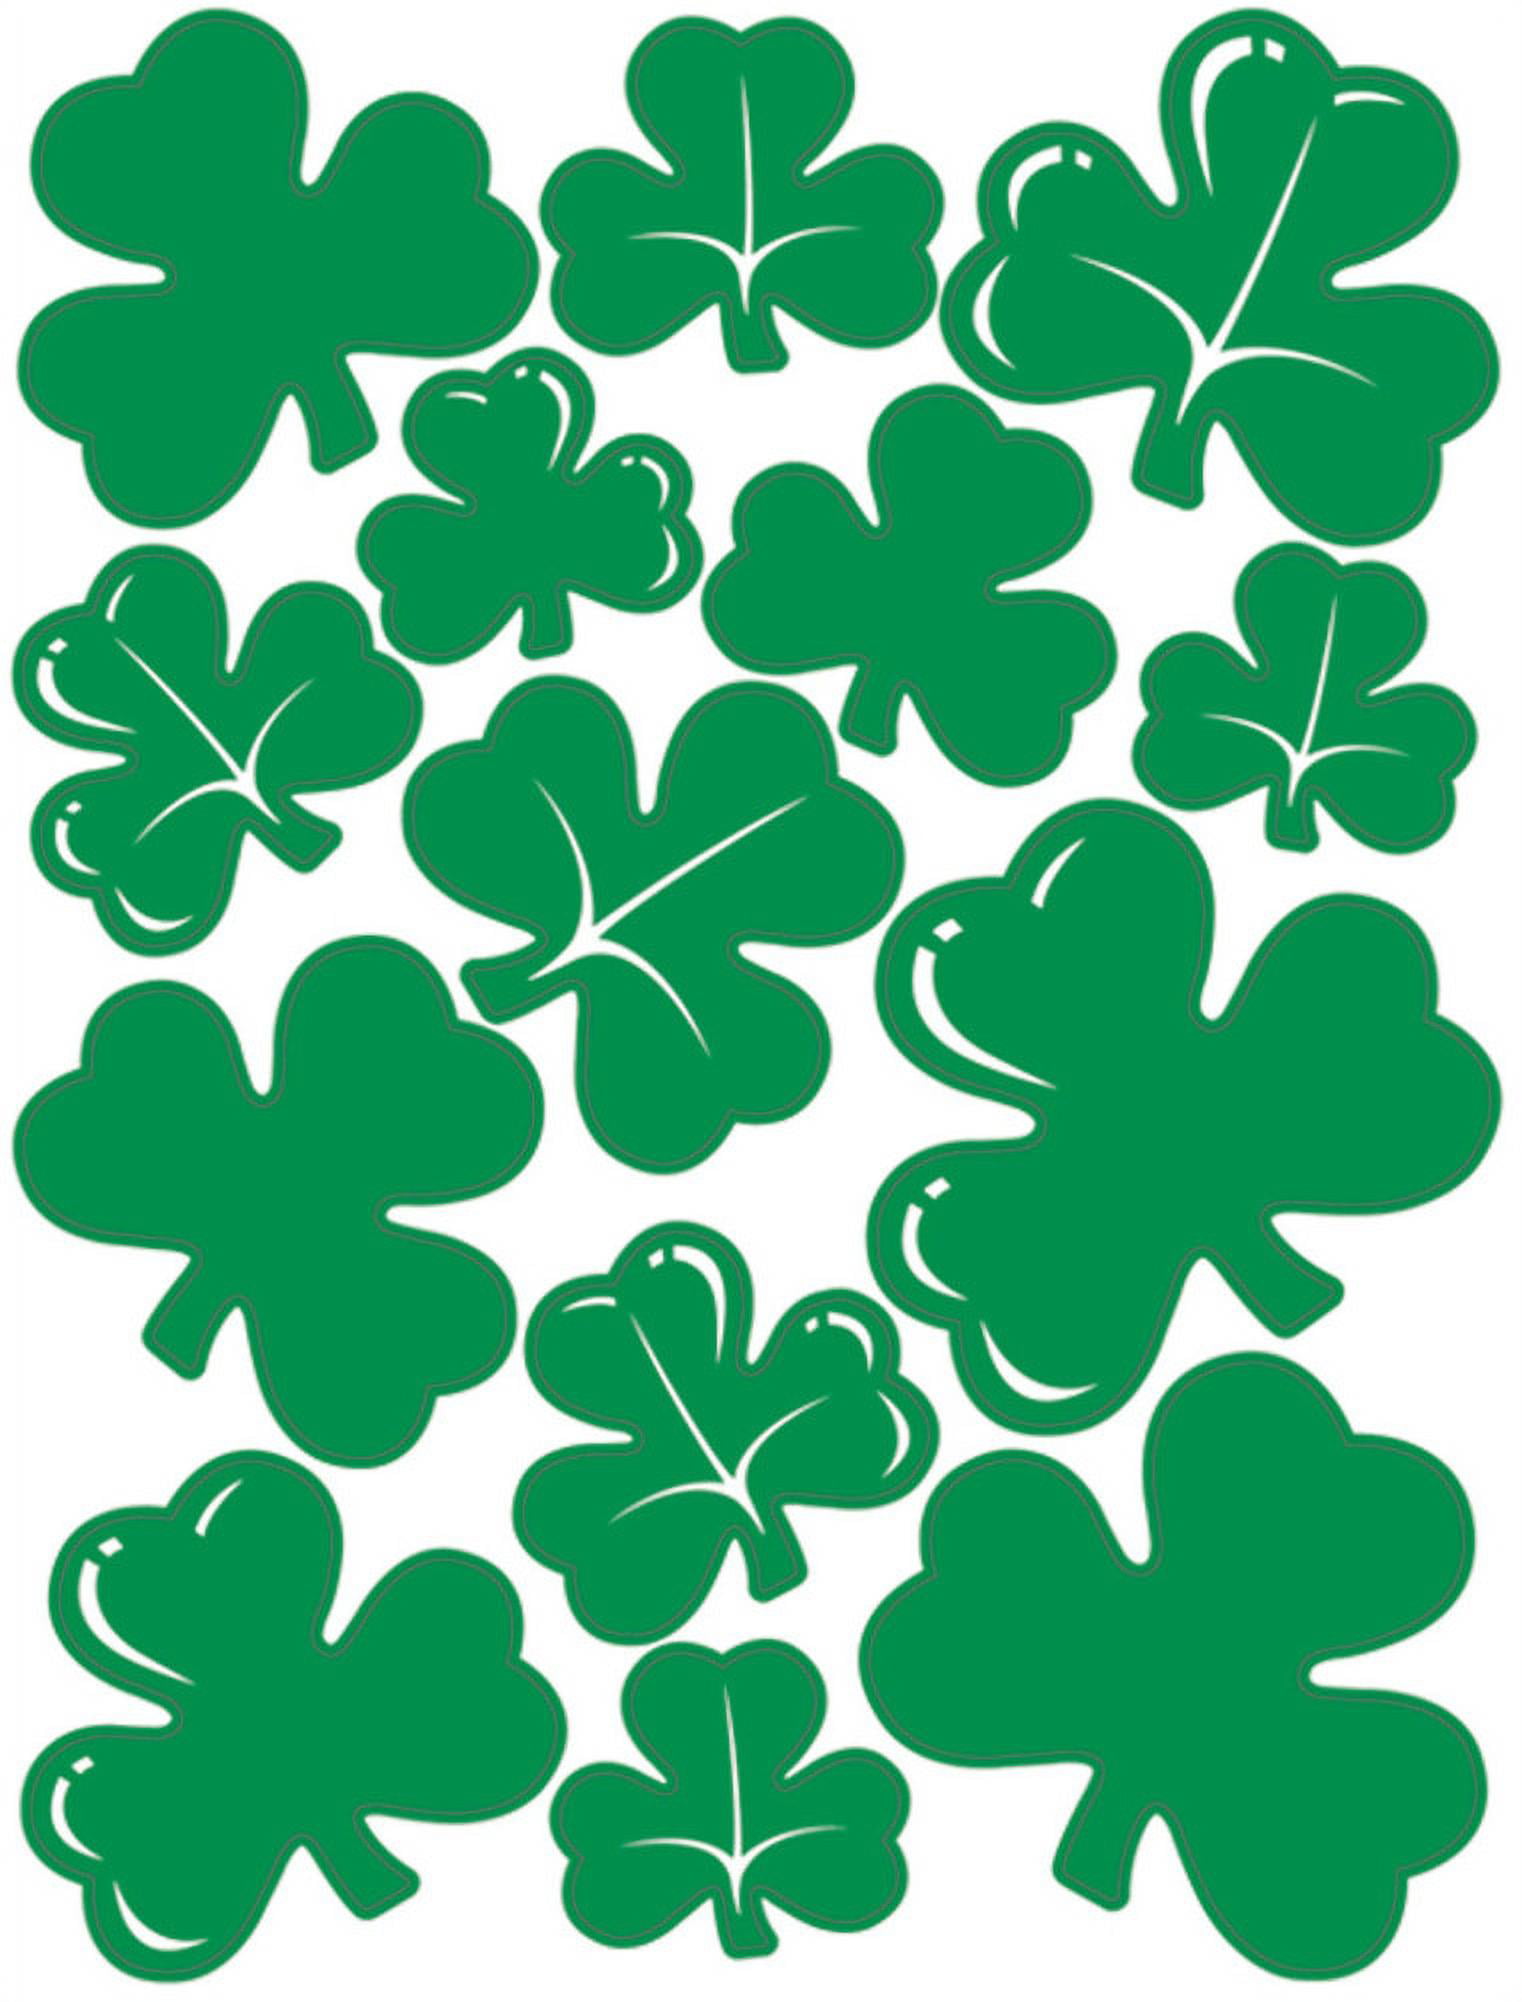 St Patricks Day Green Shamrocks Peel 'N Place Party Wall Clings 12-17"